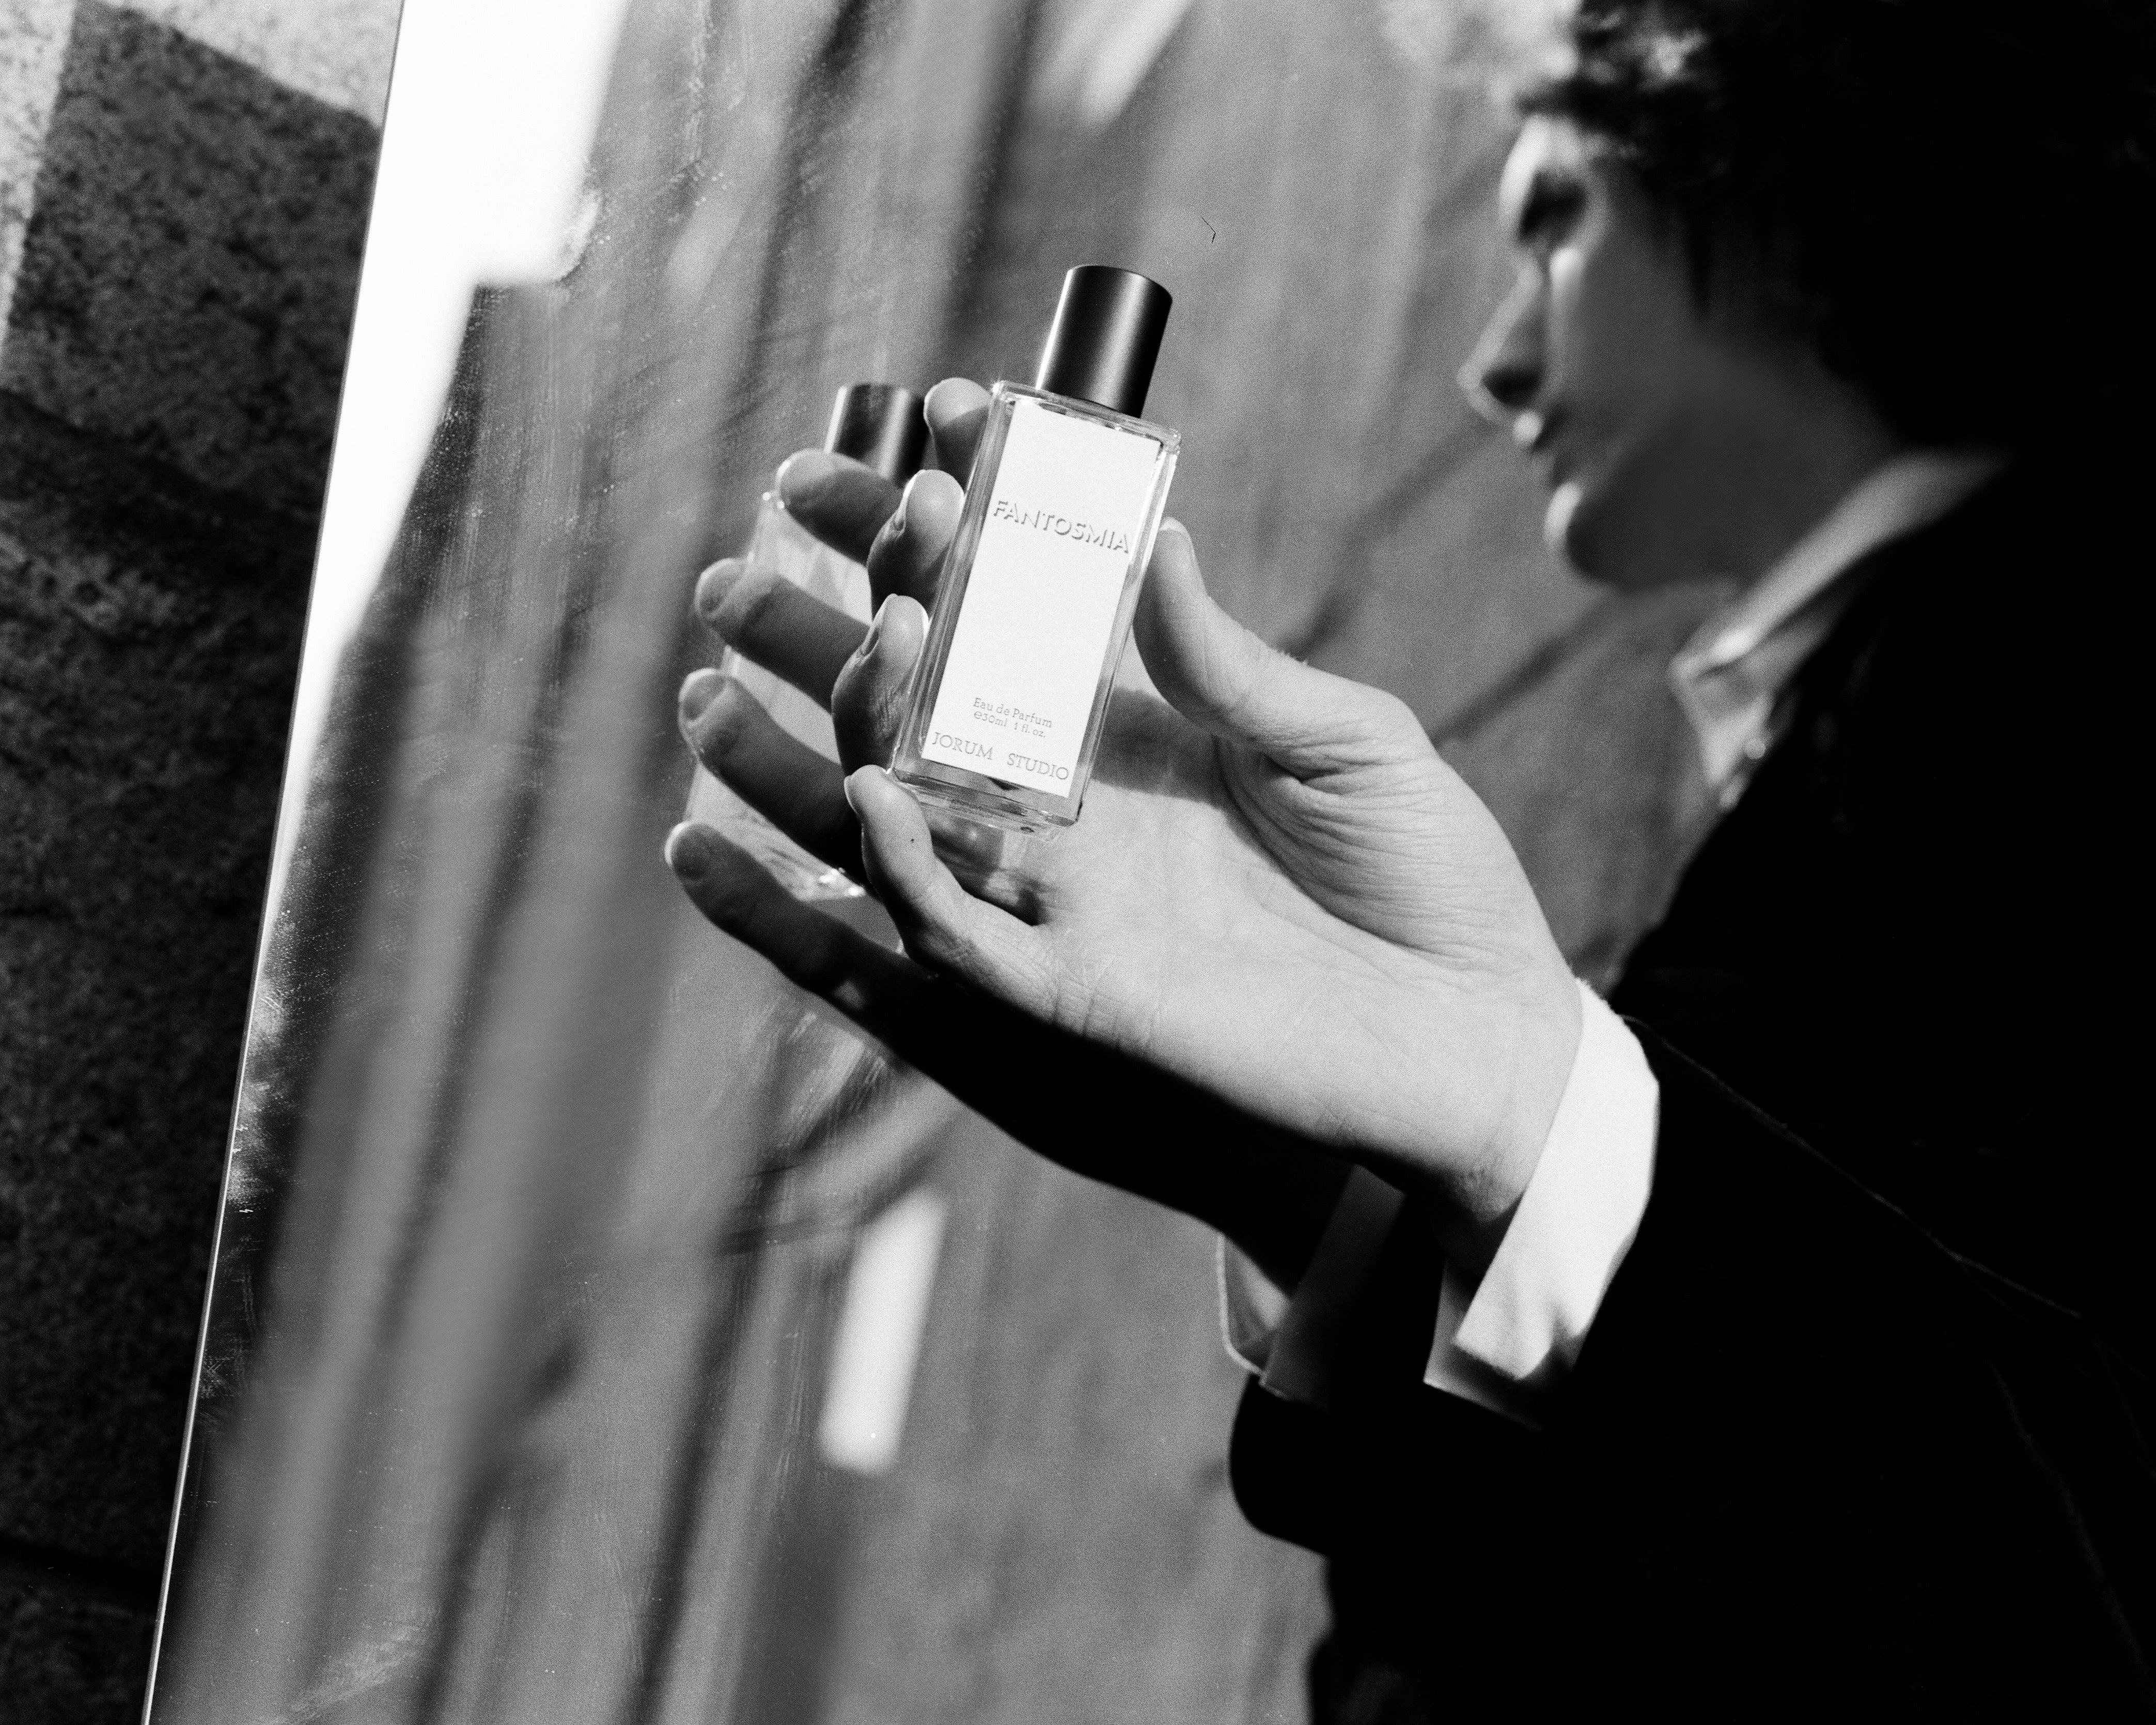 Jorum Studio Winter Campaign model's hand holding bottle of Fantosmia Eau de Parfum by Jorum Studio